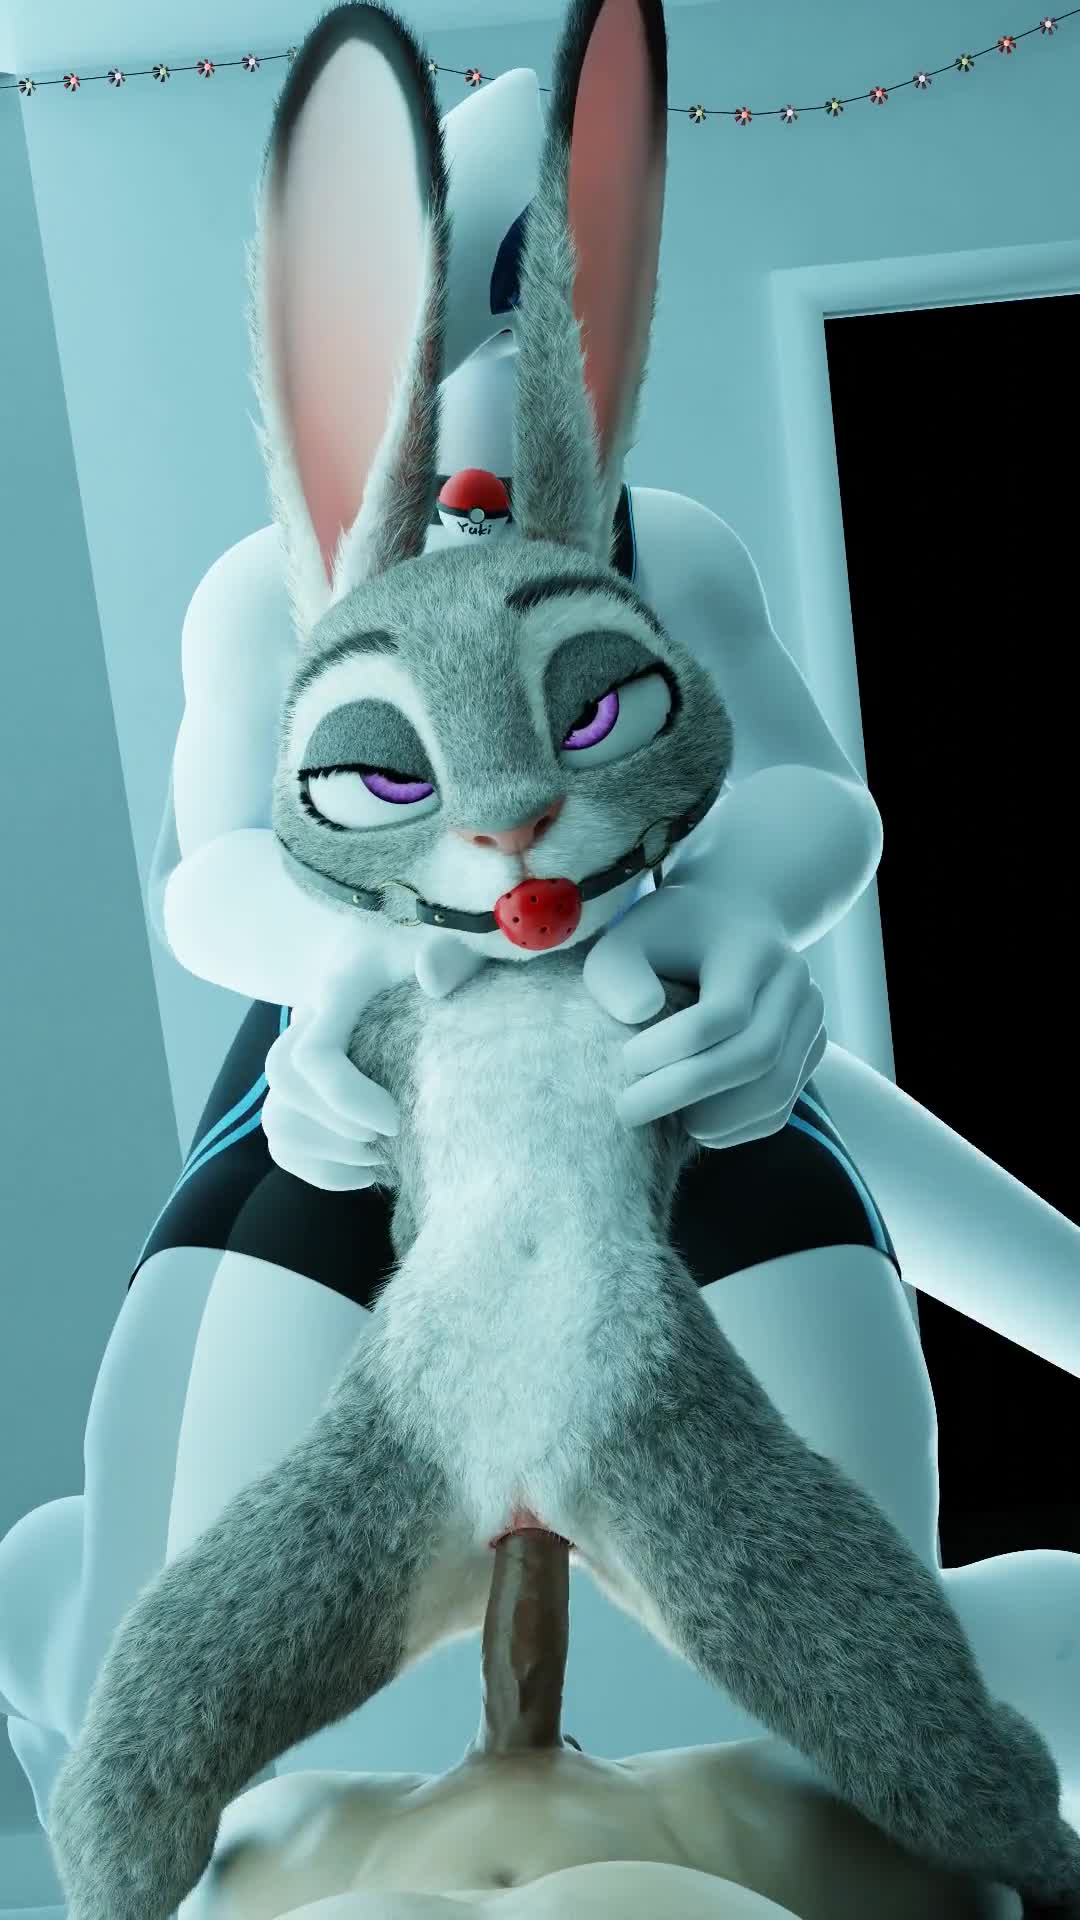 Judy hopps lewd